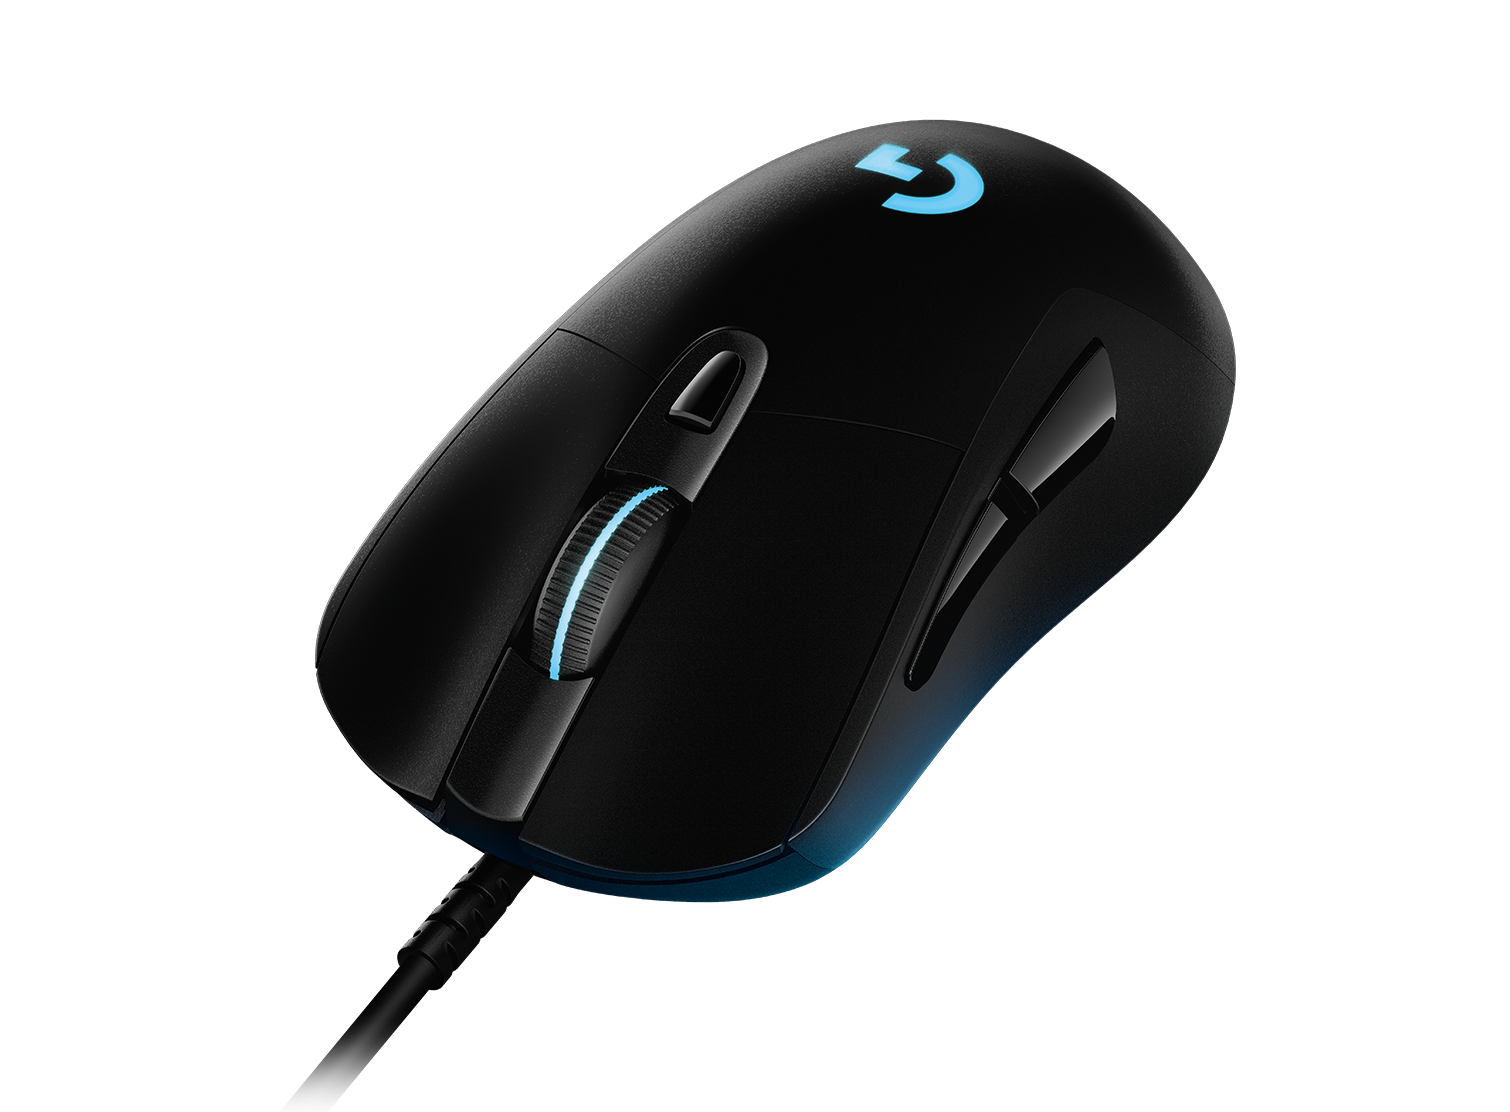 Aankoop stap Booth Logitech G403 HERO Gaming Mouse with LIGHTSYNC RGB Lighting